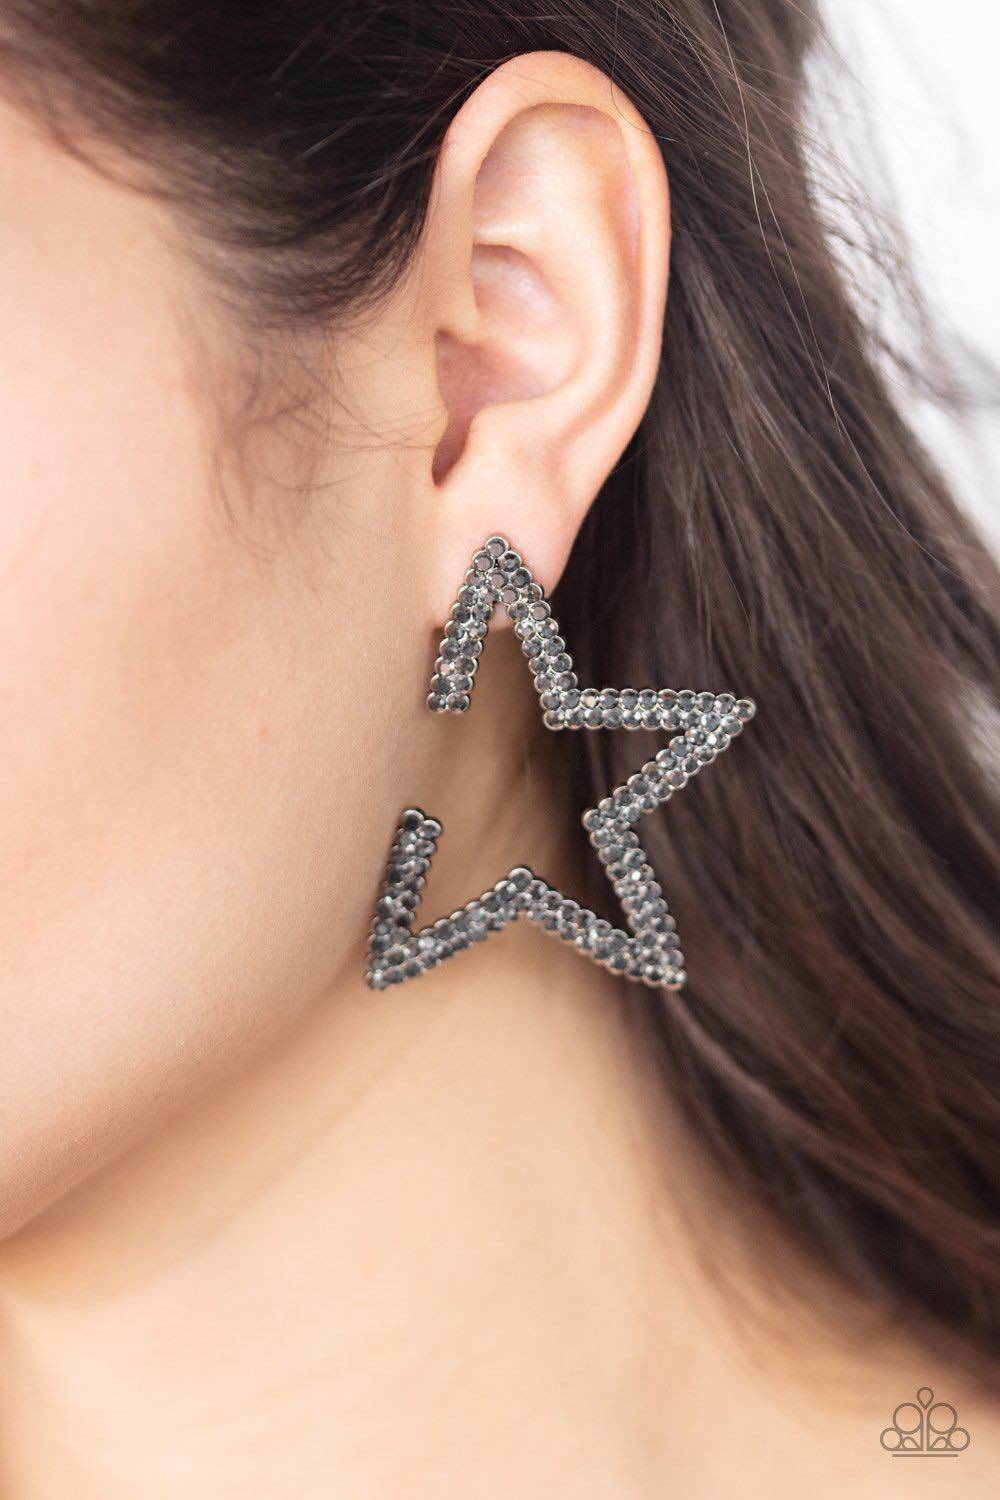 Star Player - Silver Star Rhinestone Earrings - Paparazzi Accessories - GlaMarous Titi Jewels